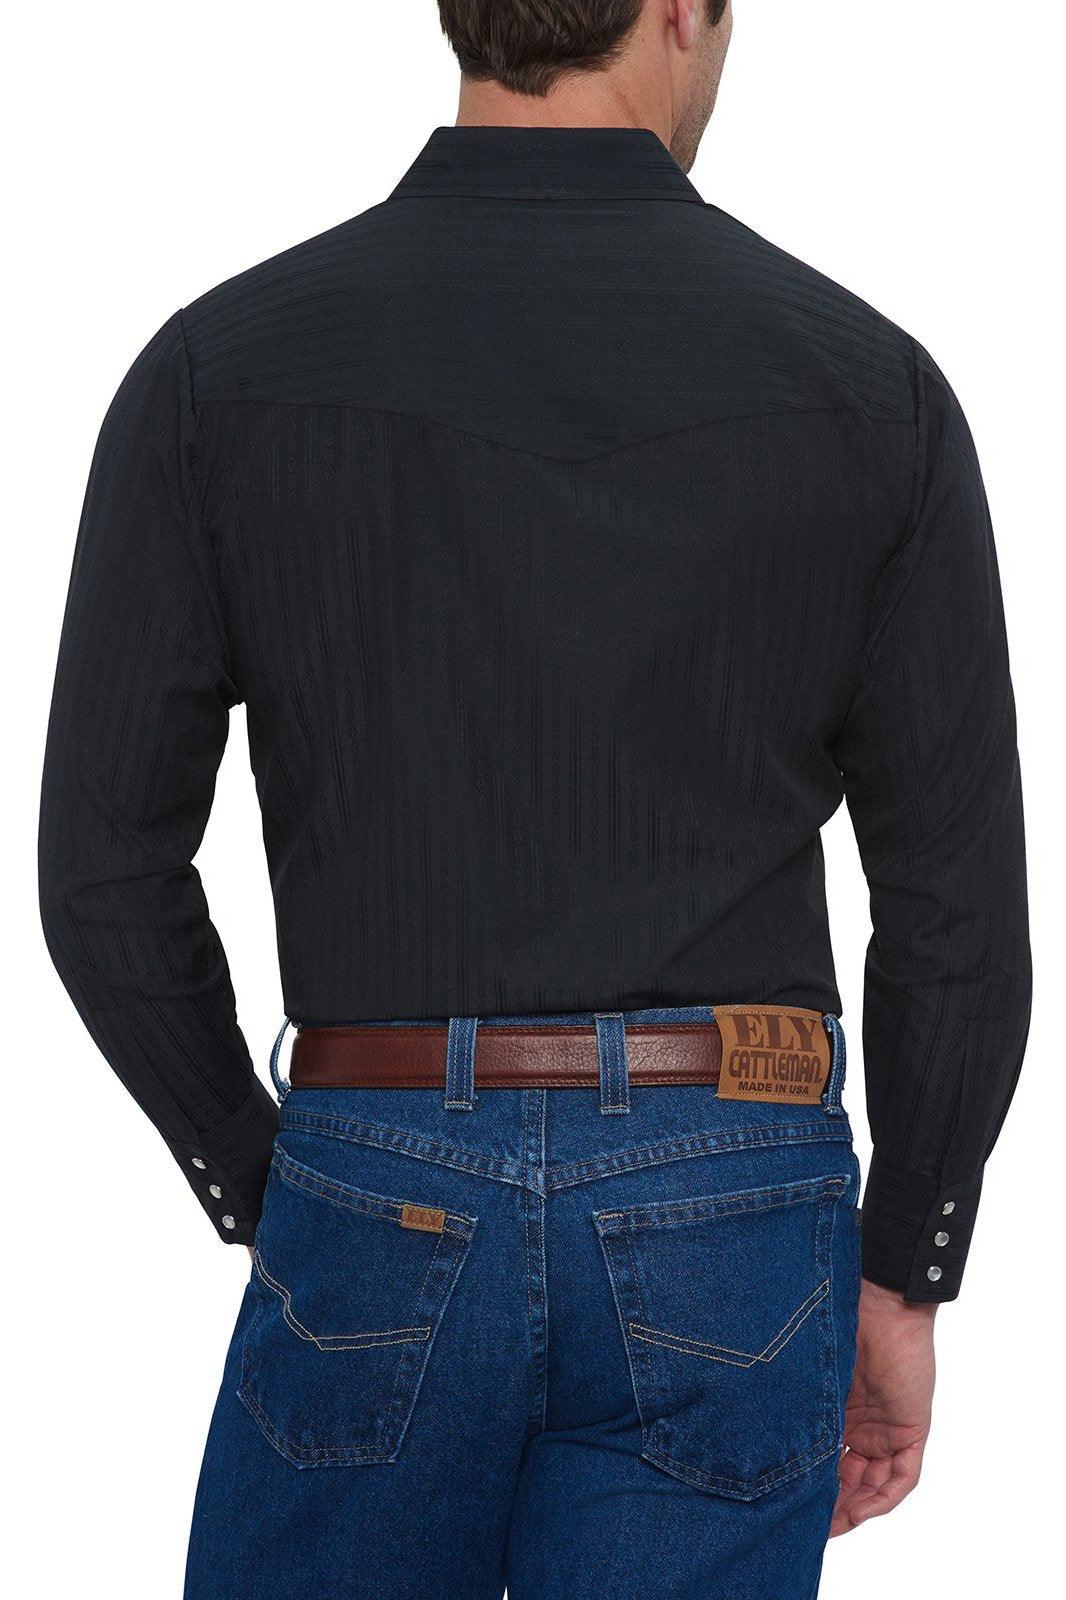 Ely Cattleman Mens L/S Black Tone On Tone Snap Shirt - Flyclothing LLC